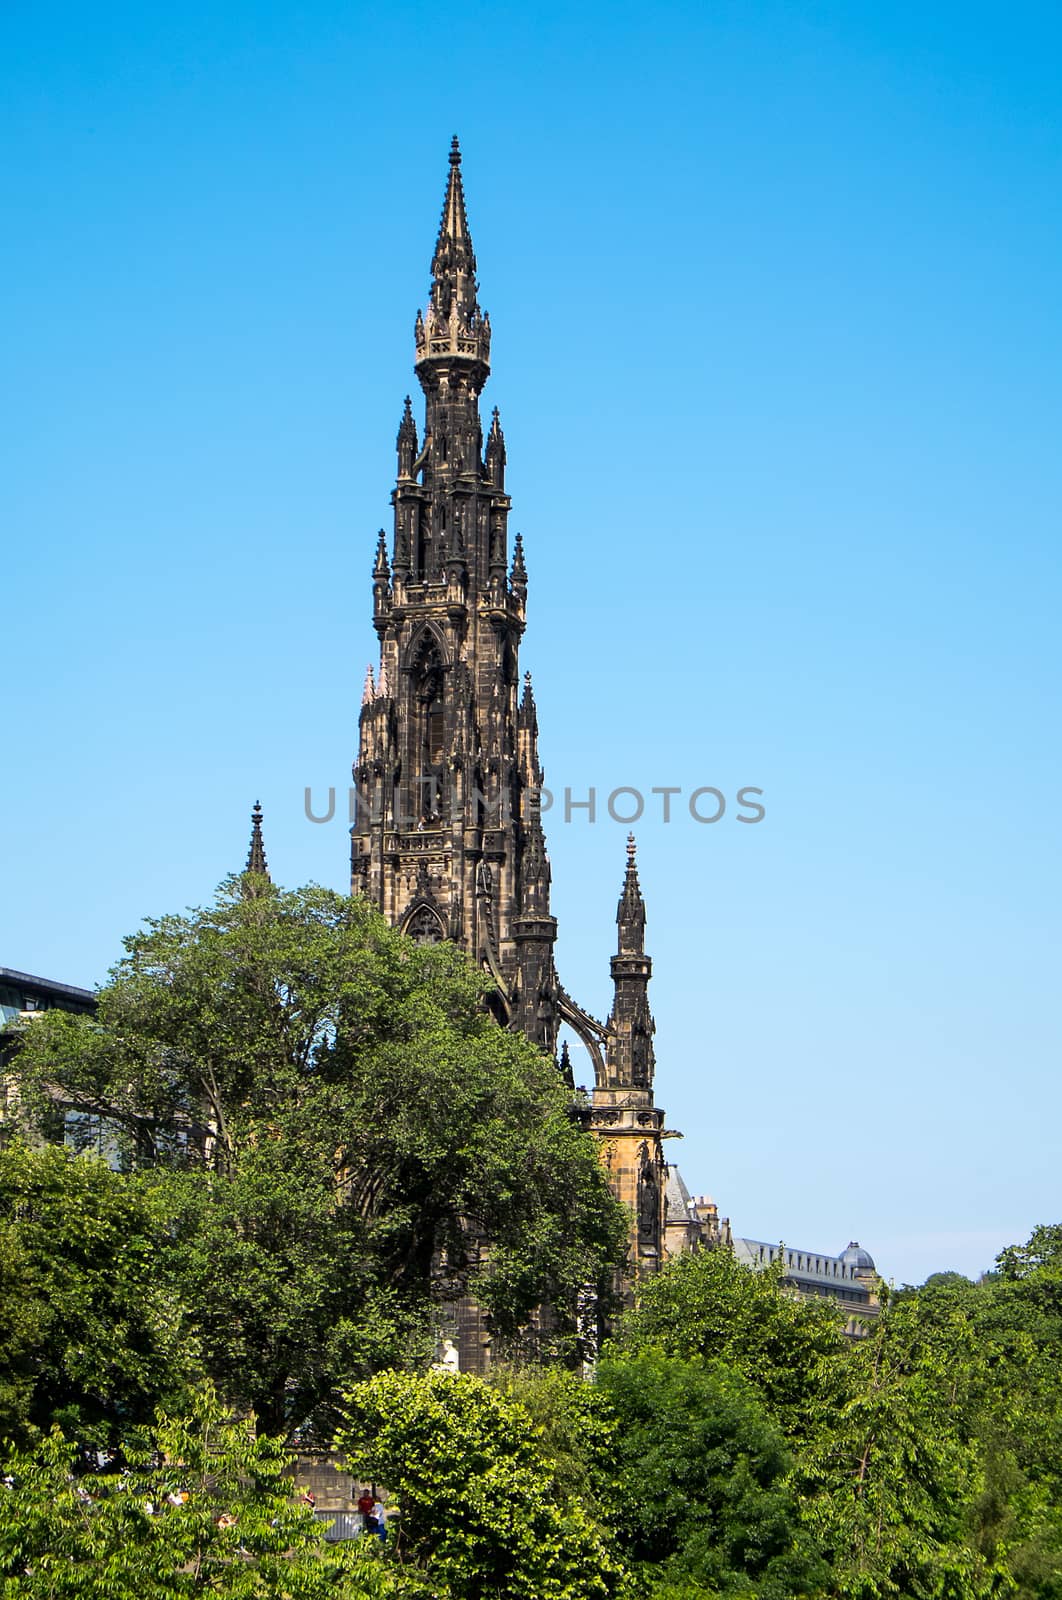 The spire of the Scott Monument in Edinburgh, Scotland